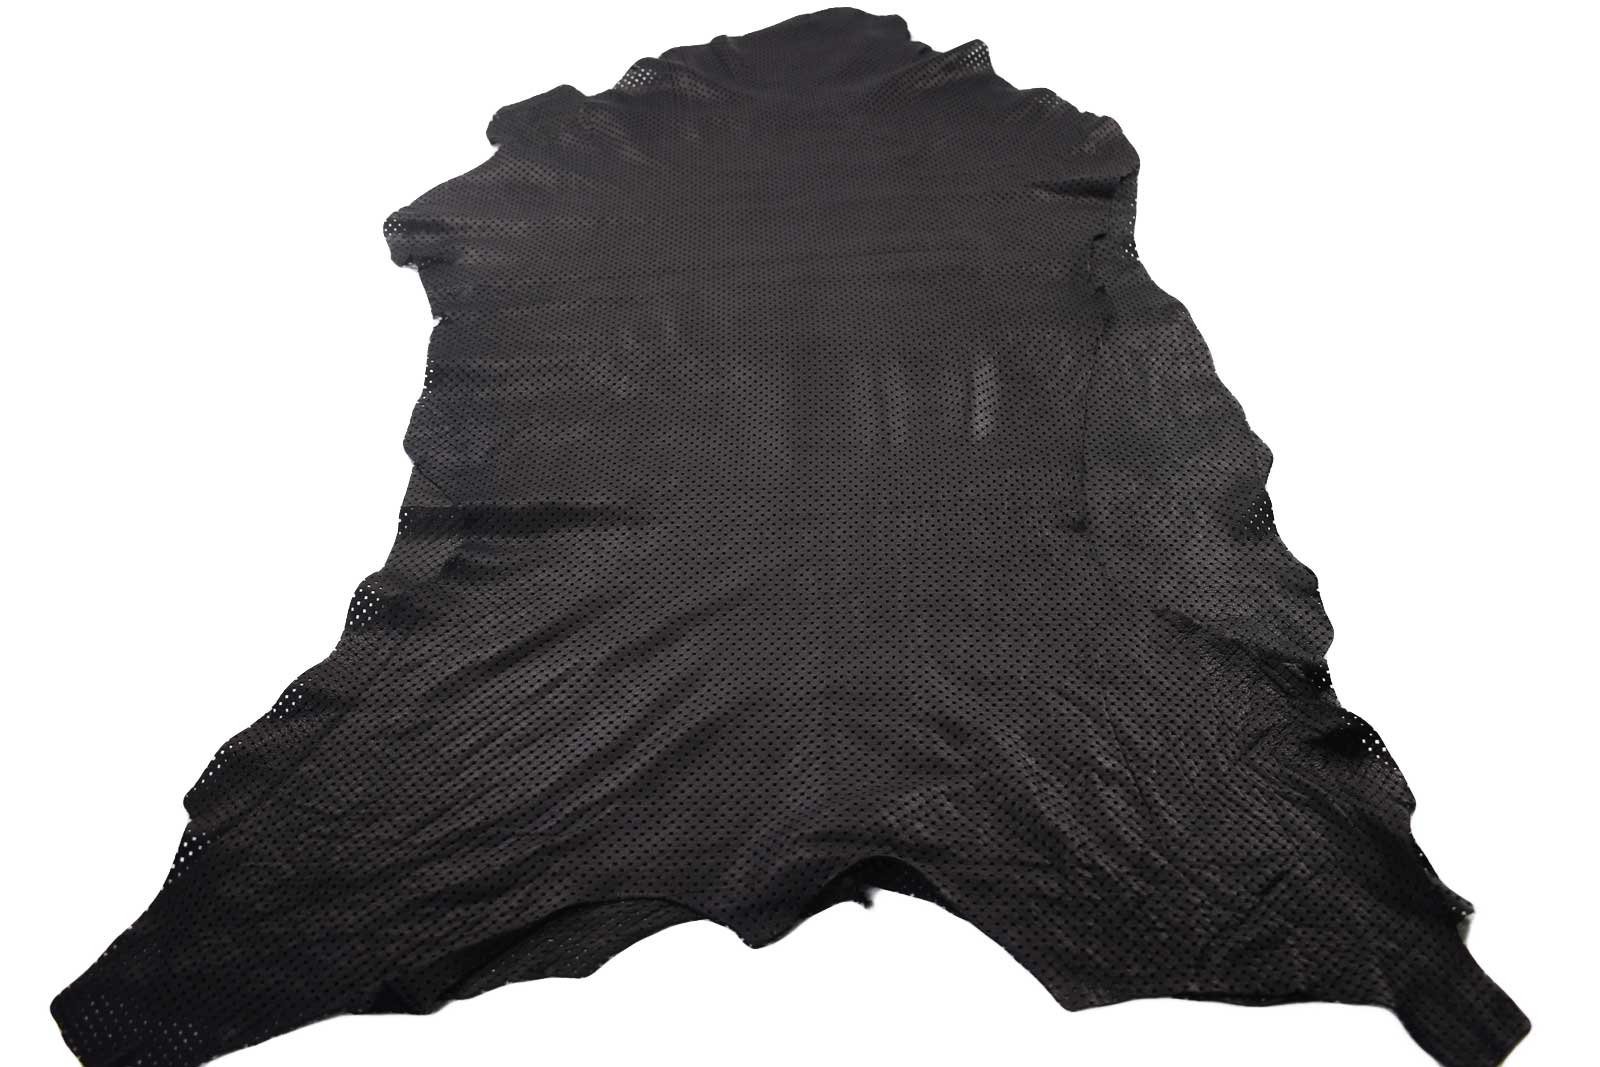 Soft Black perforated sheepskin 7 sq ft